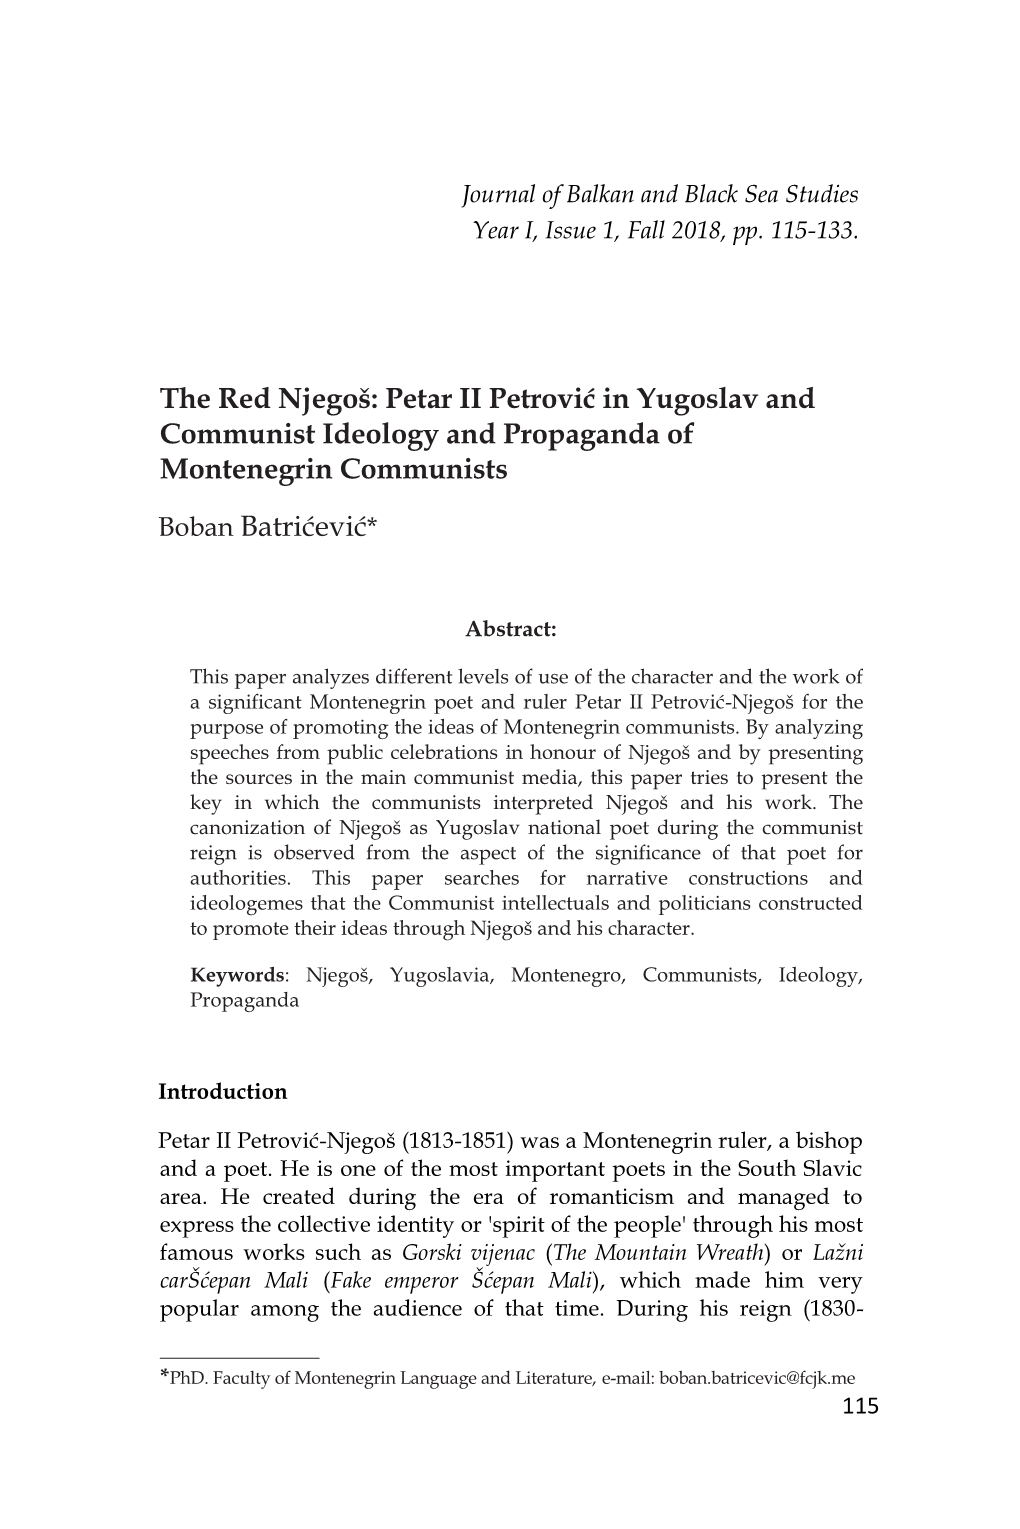 The Red Njegoš: Petar II Petrović in Yugoslav and Communist Ideology and Propaganda of Montenegrin Communists